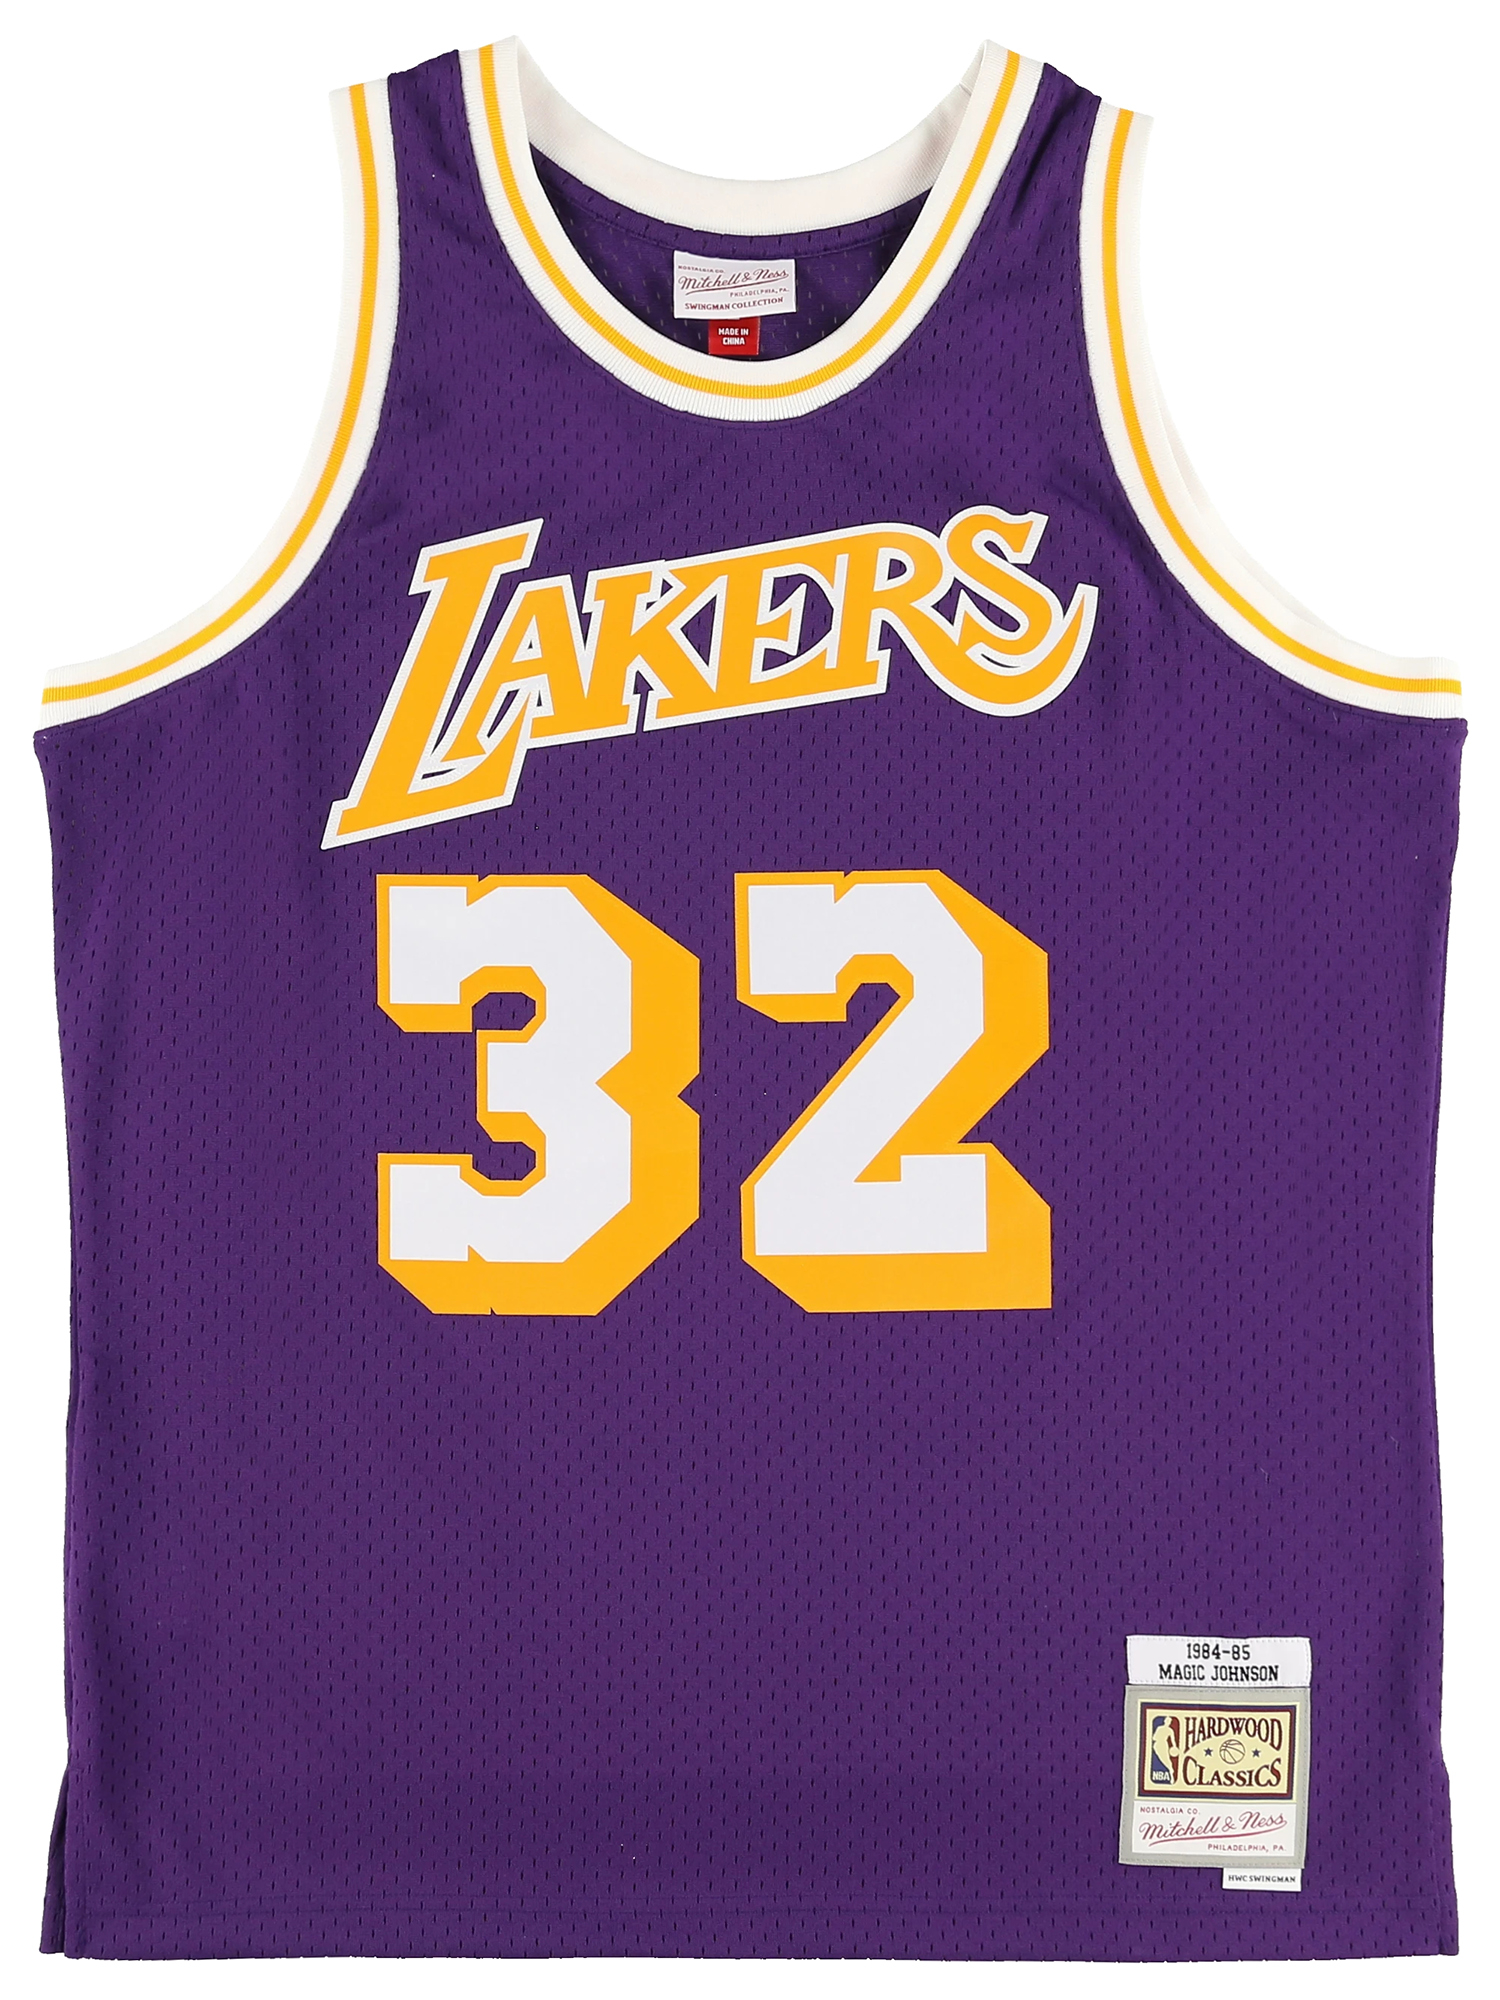 2000-2001 Topps #MJ9 Lakers Magic Johnson マジック・ジョンソン レイカーズ NBAカード